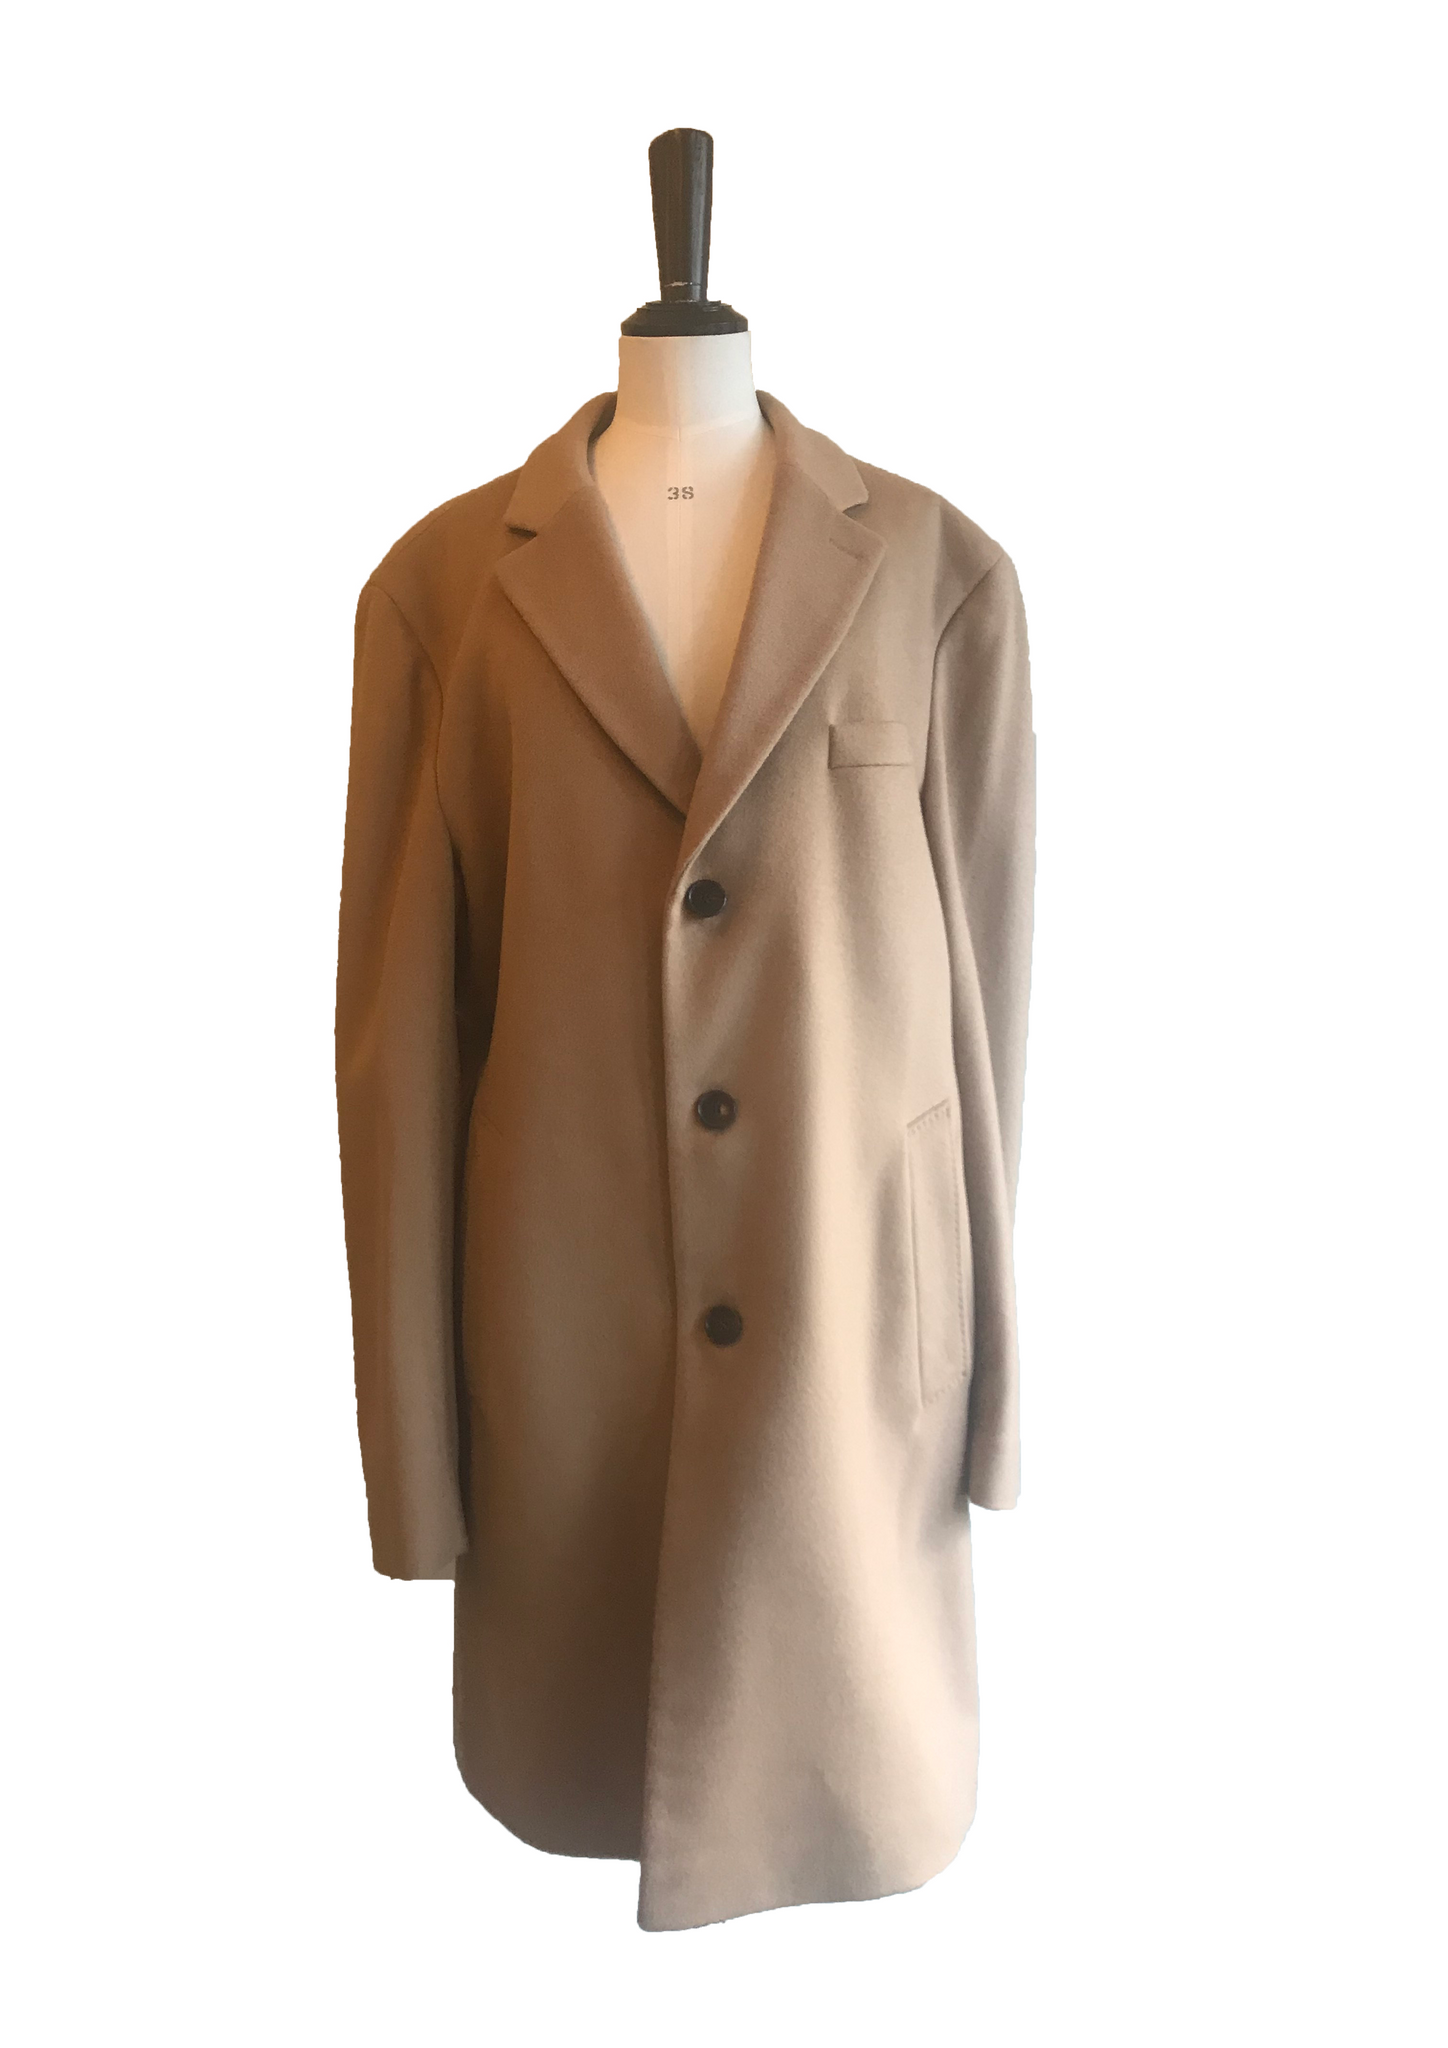 Isabella's Wardrobe Hugo Boss Wool/Cashmere Mix Coat.